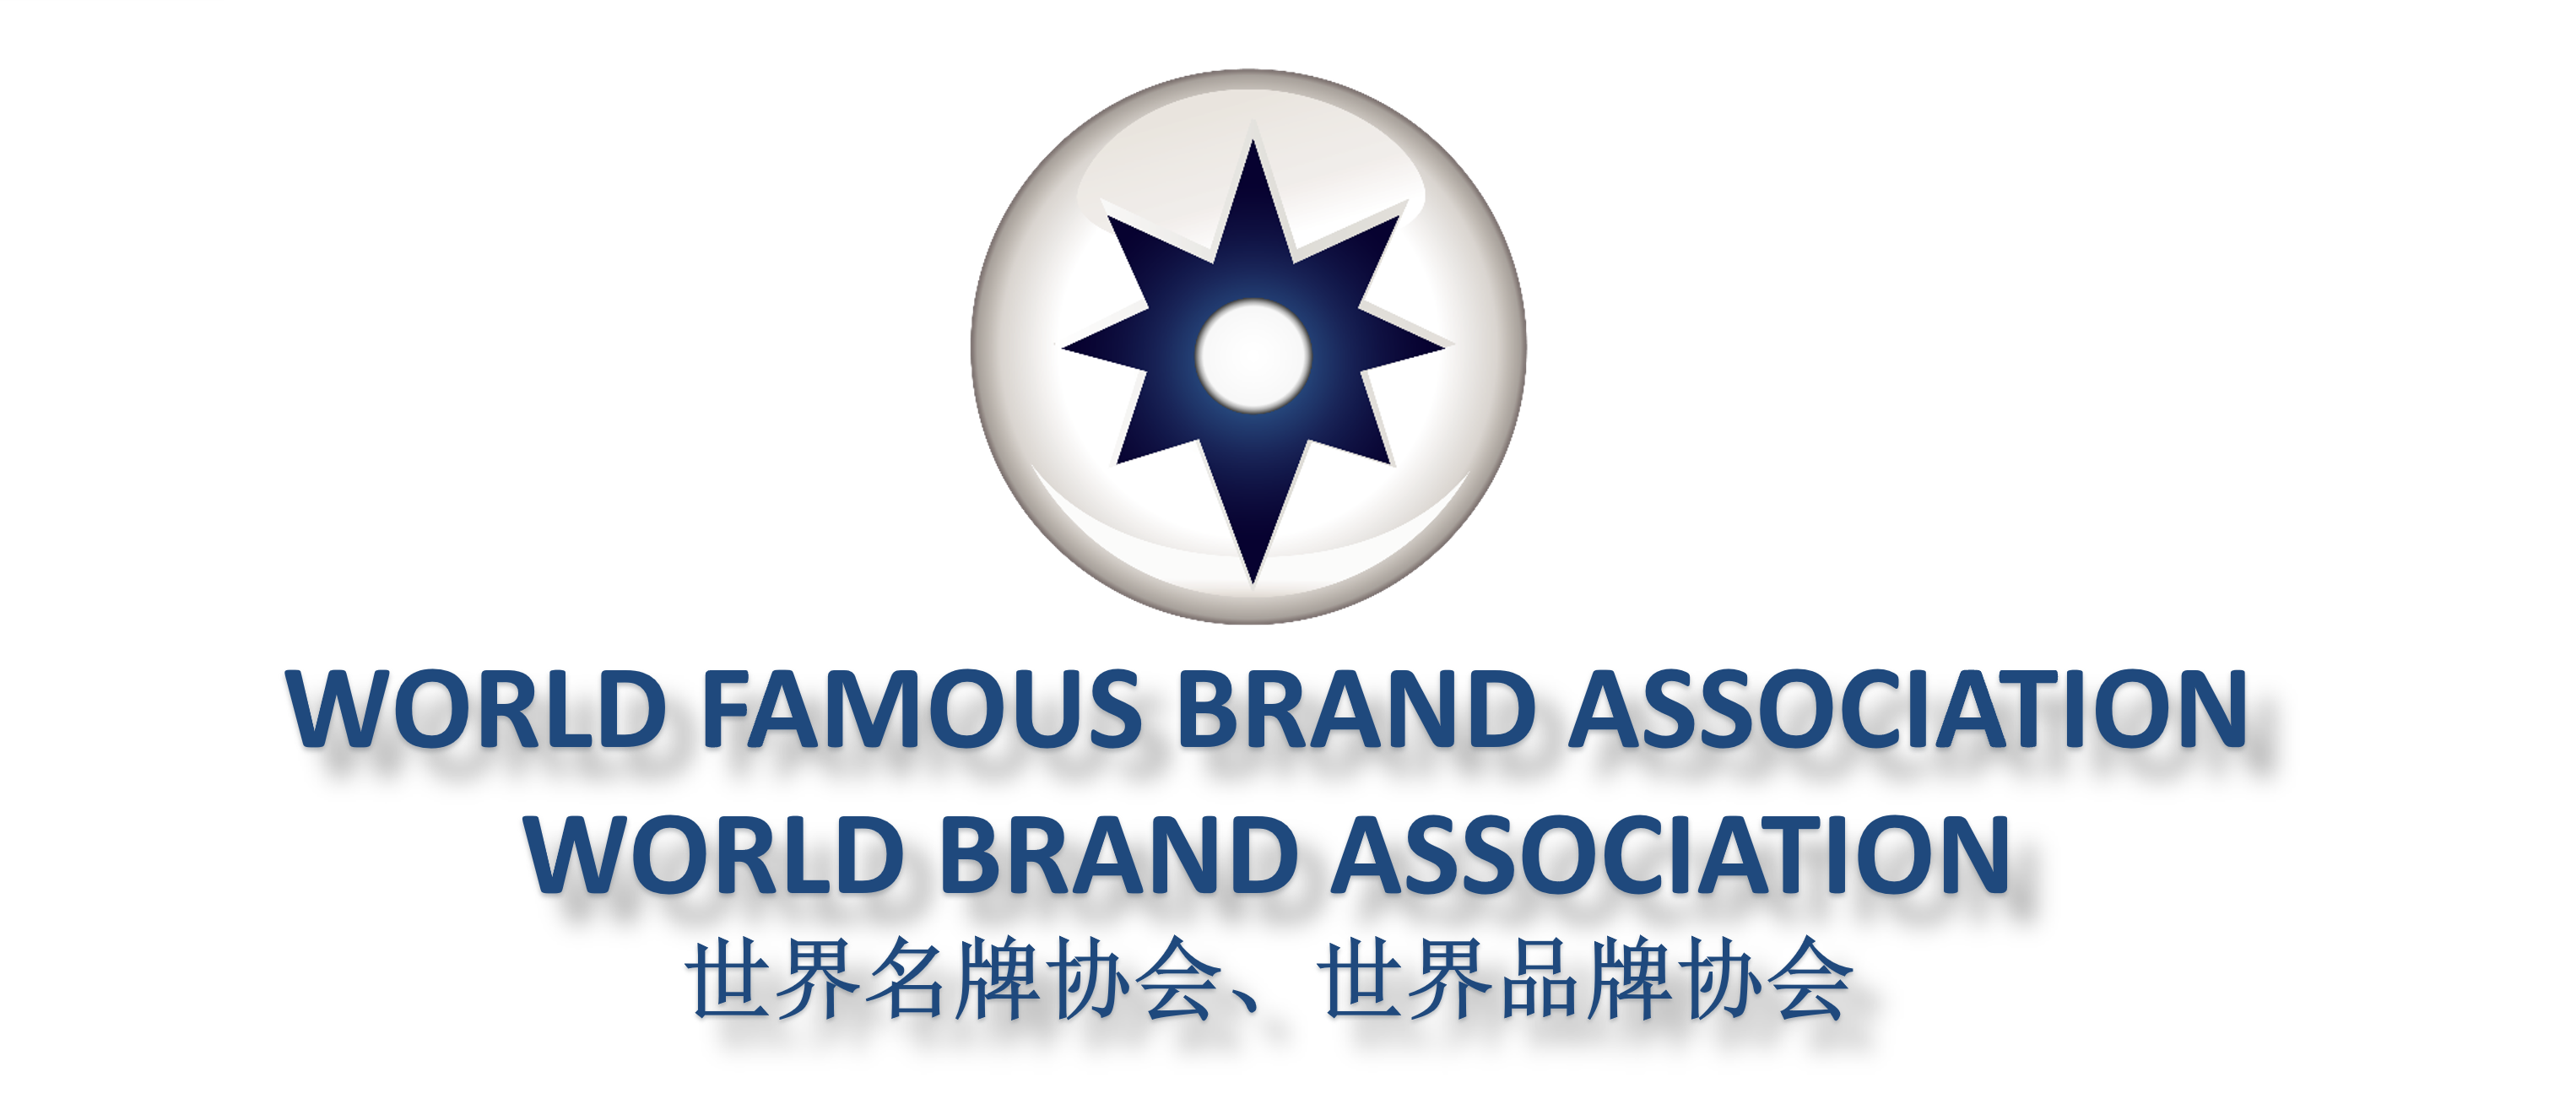 世界名牌协会官方网站 WORLD FAMOUS BRAND ASSOCIATION OFFCIAL WEBSITE